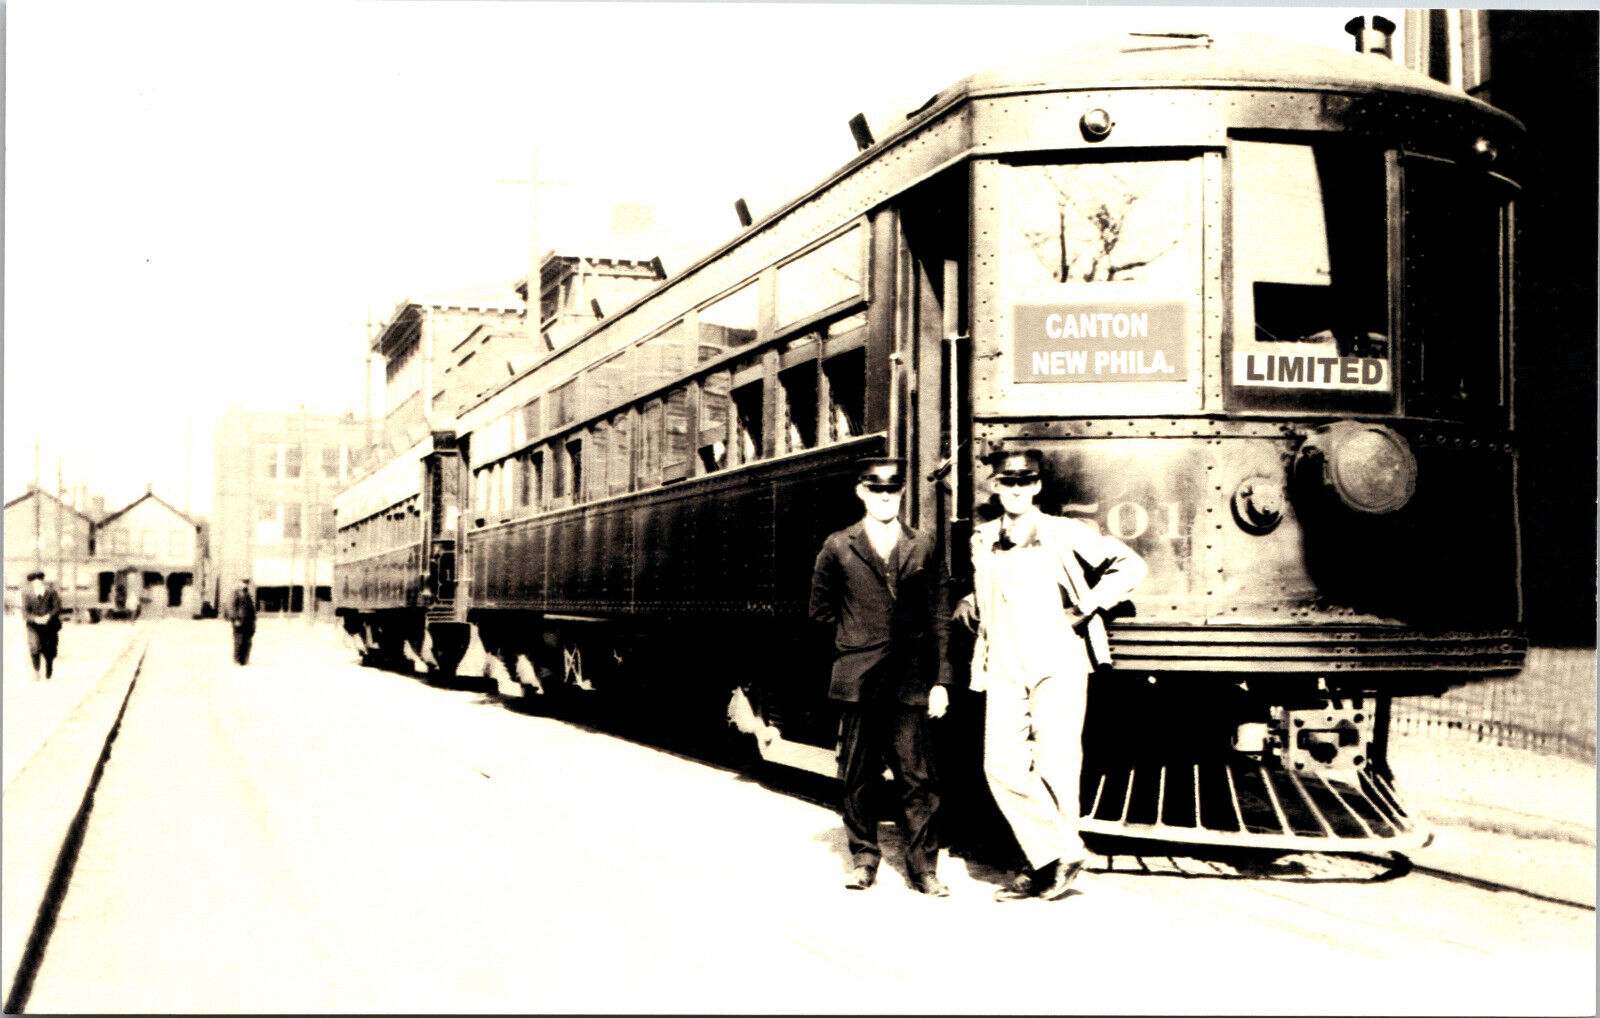 1928 NOT&L Depot New Philly Railway Postcard Trolley Interurban RPPC Reprint